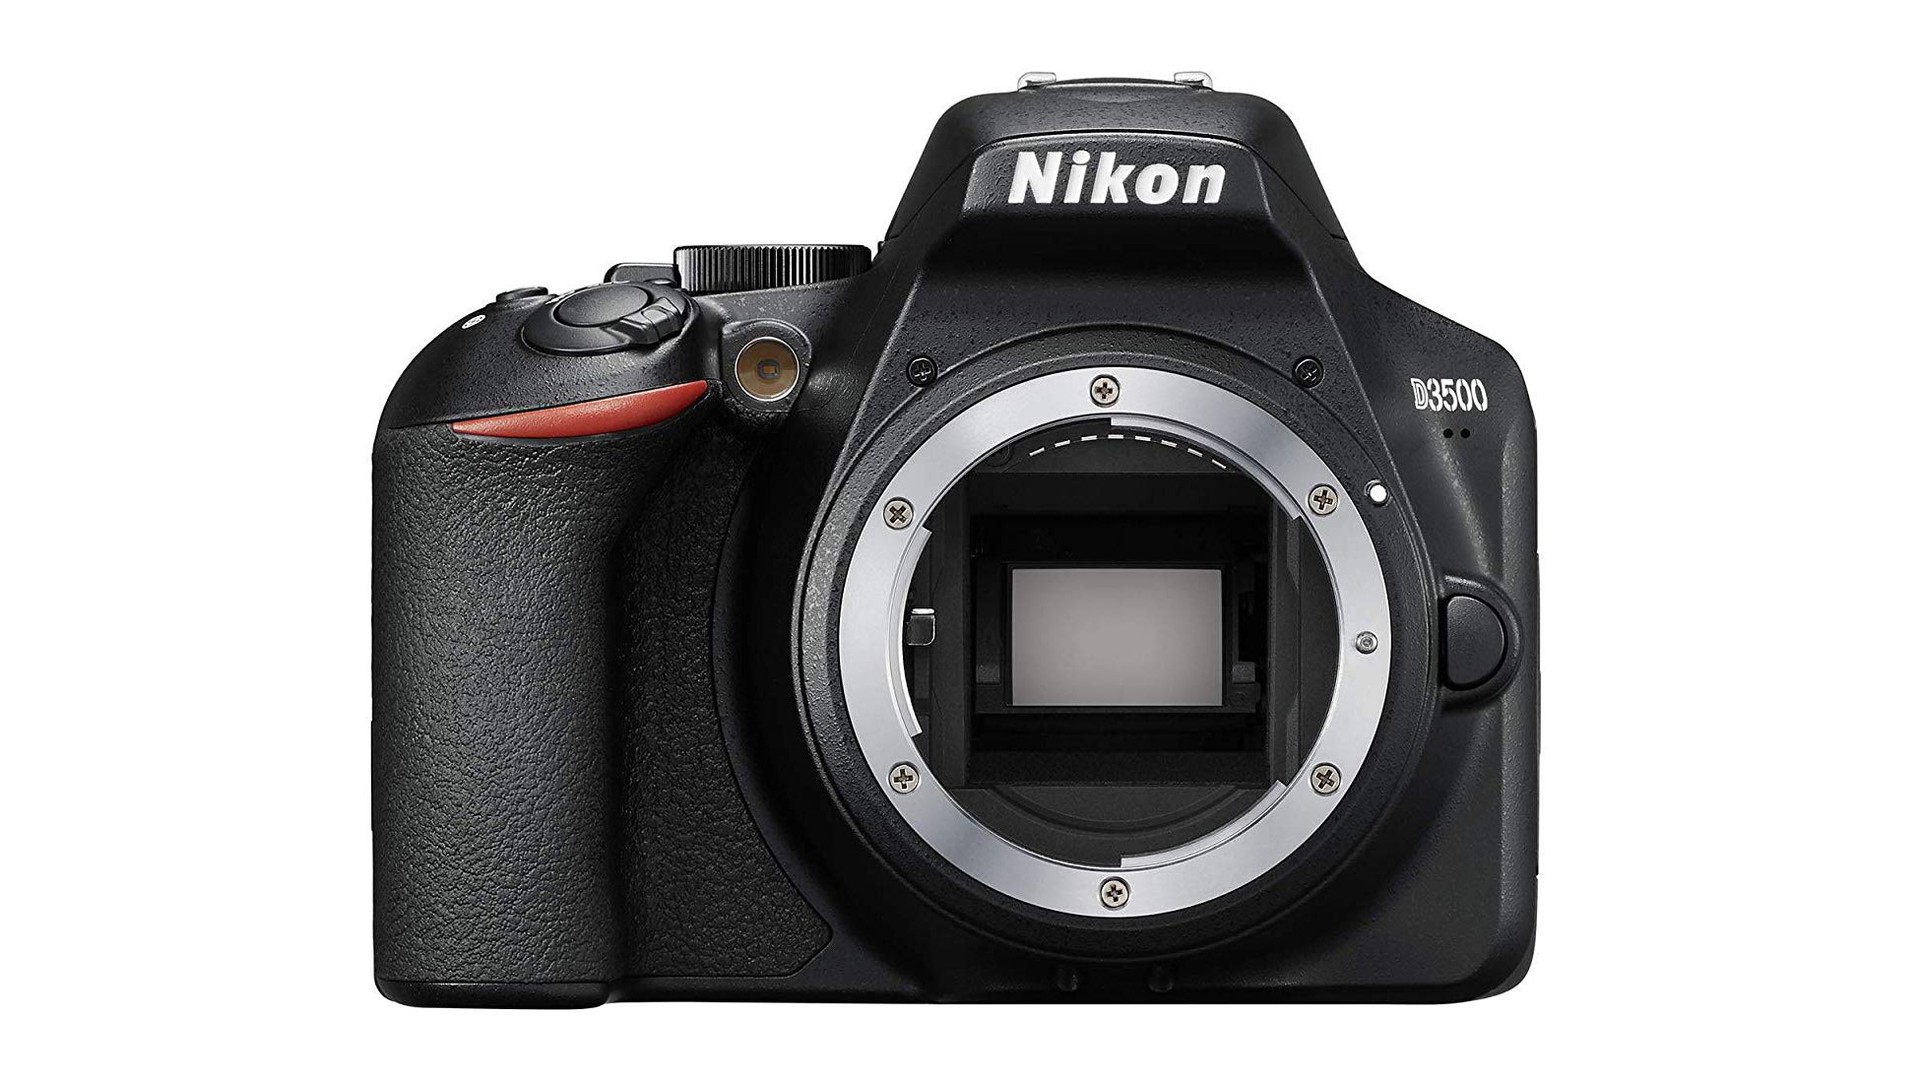 Nikon D3500 DSLR camera body